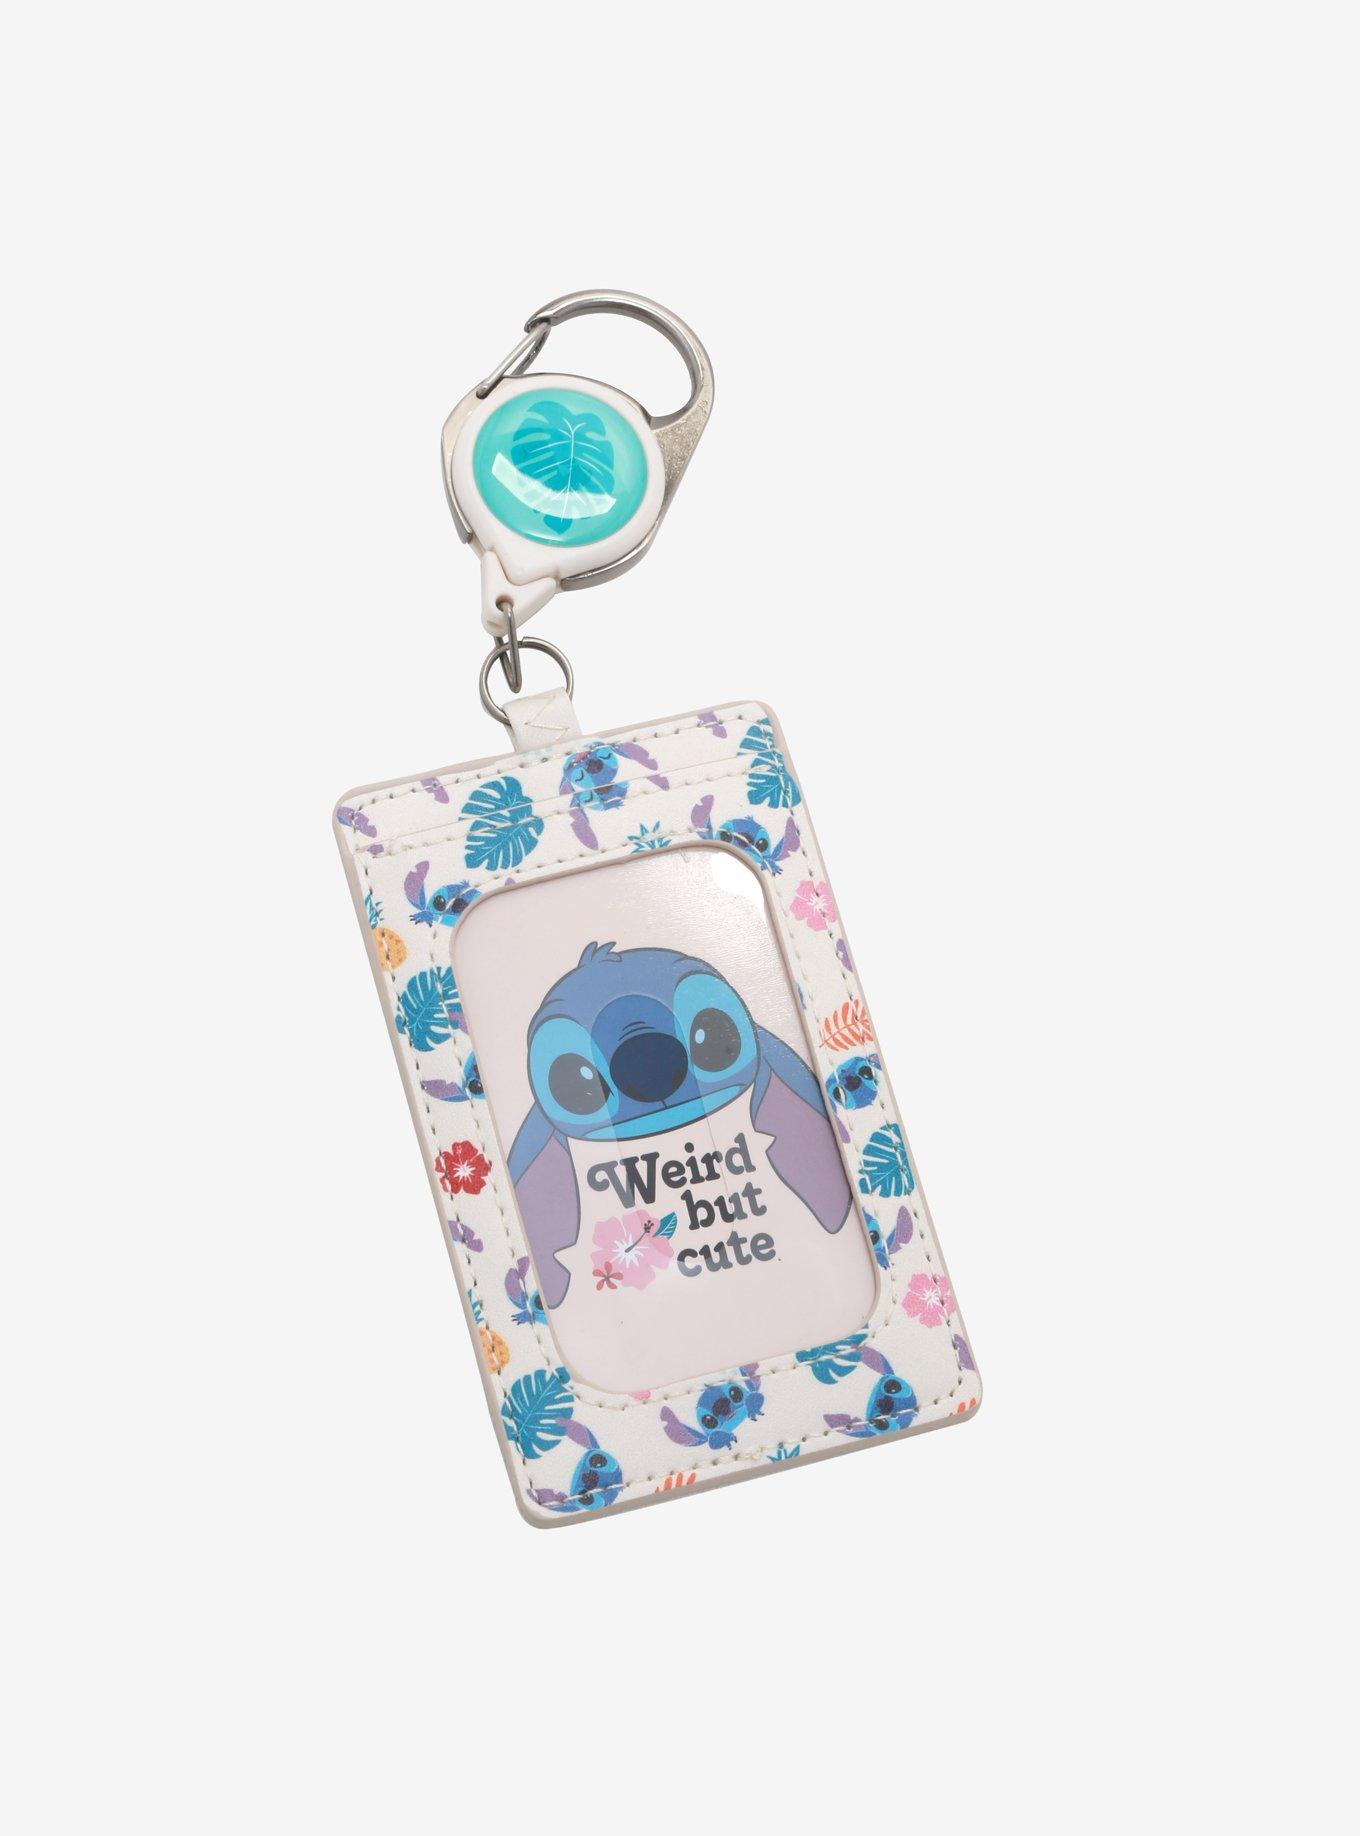 Stitch Merchandise Stuff Gift Set for Girls, Stitch Anime Drawstring Bag, Keychain Lanyard, Purse, Bracelets, Stickers, Button Pins, Necklace, ID